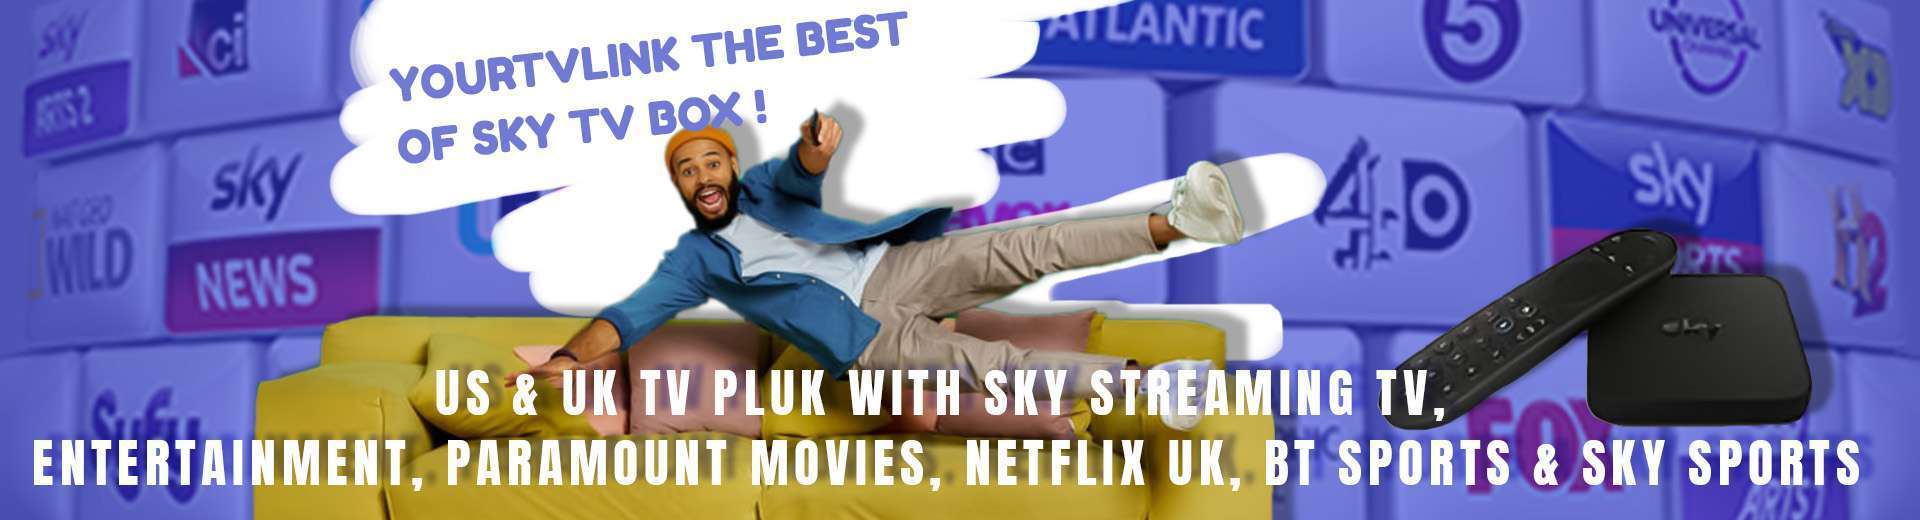 Yourtvlik the best of sky tv box uk & US